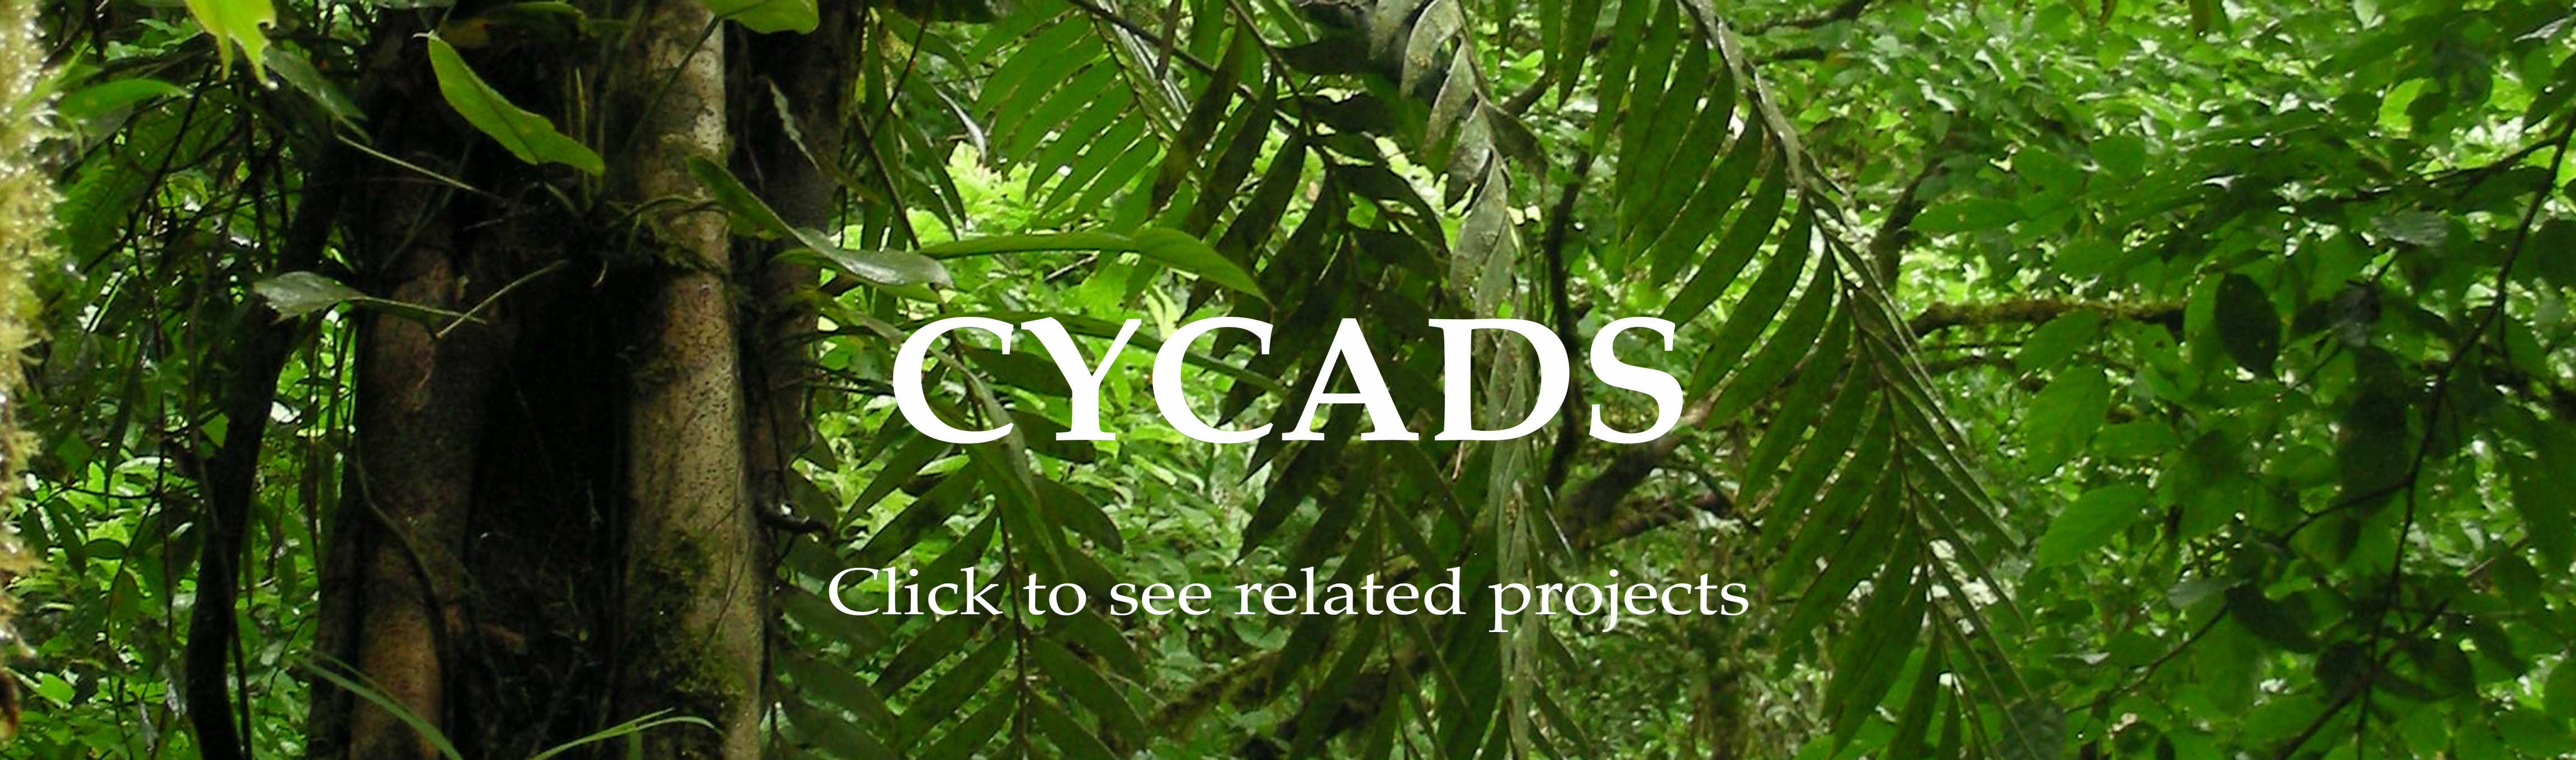 cycads-banner